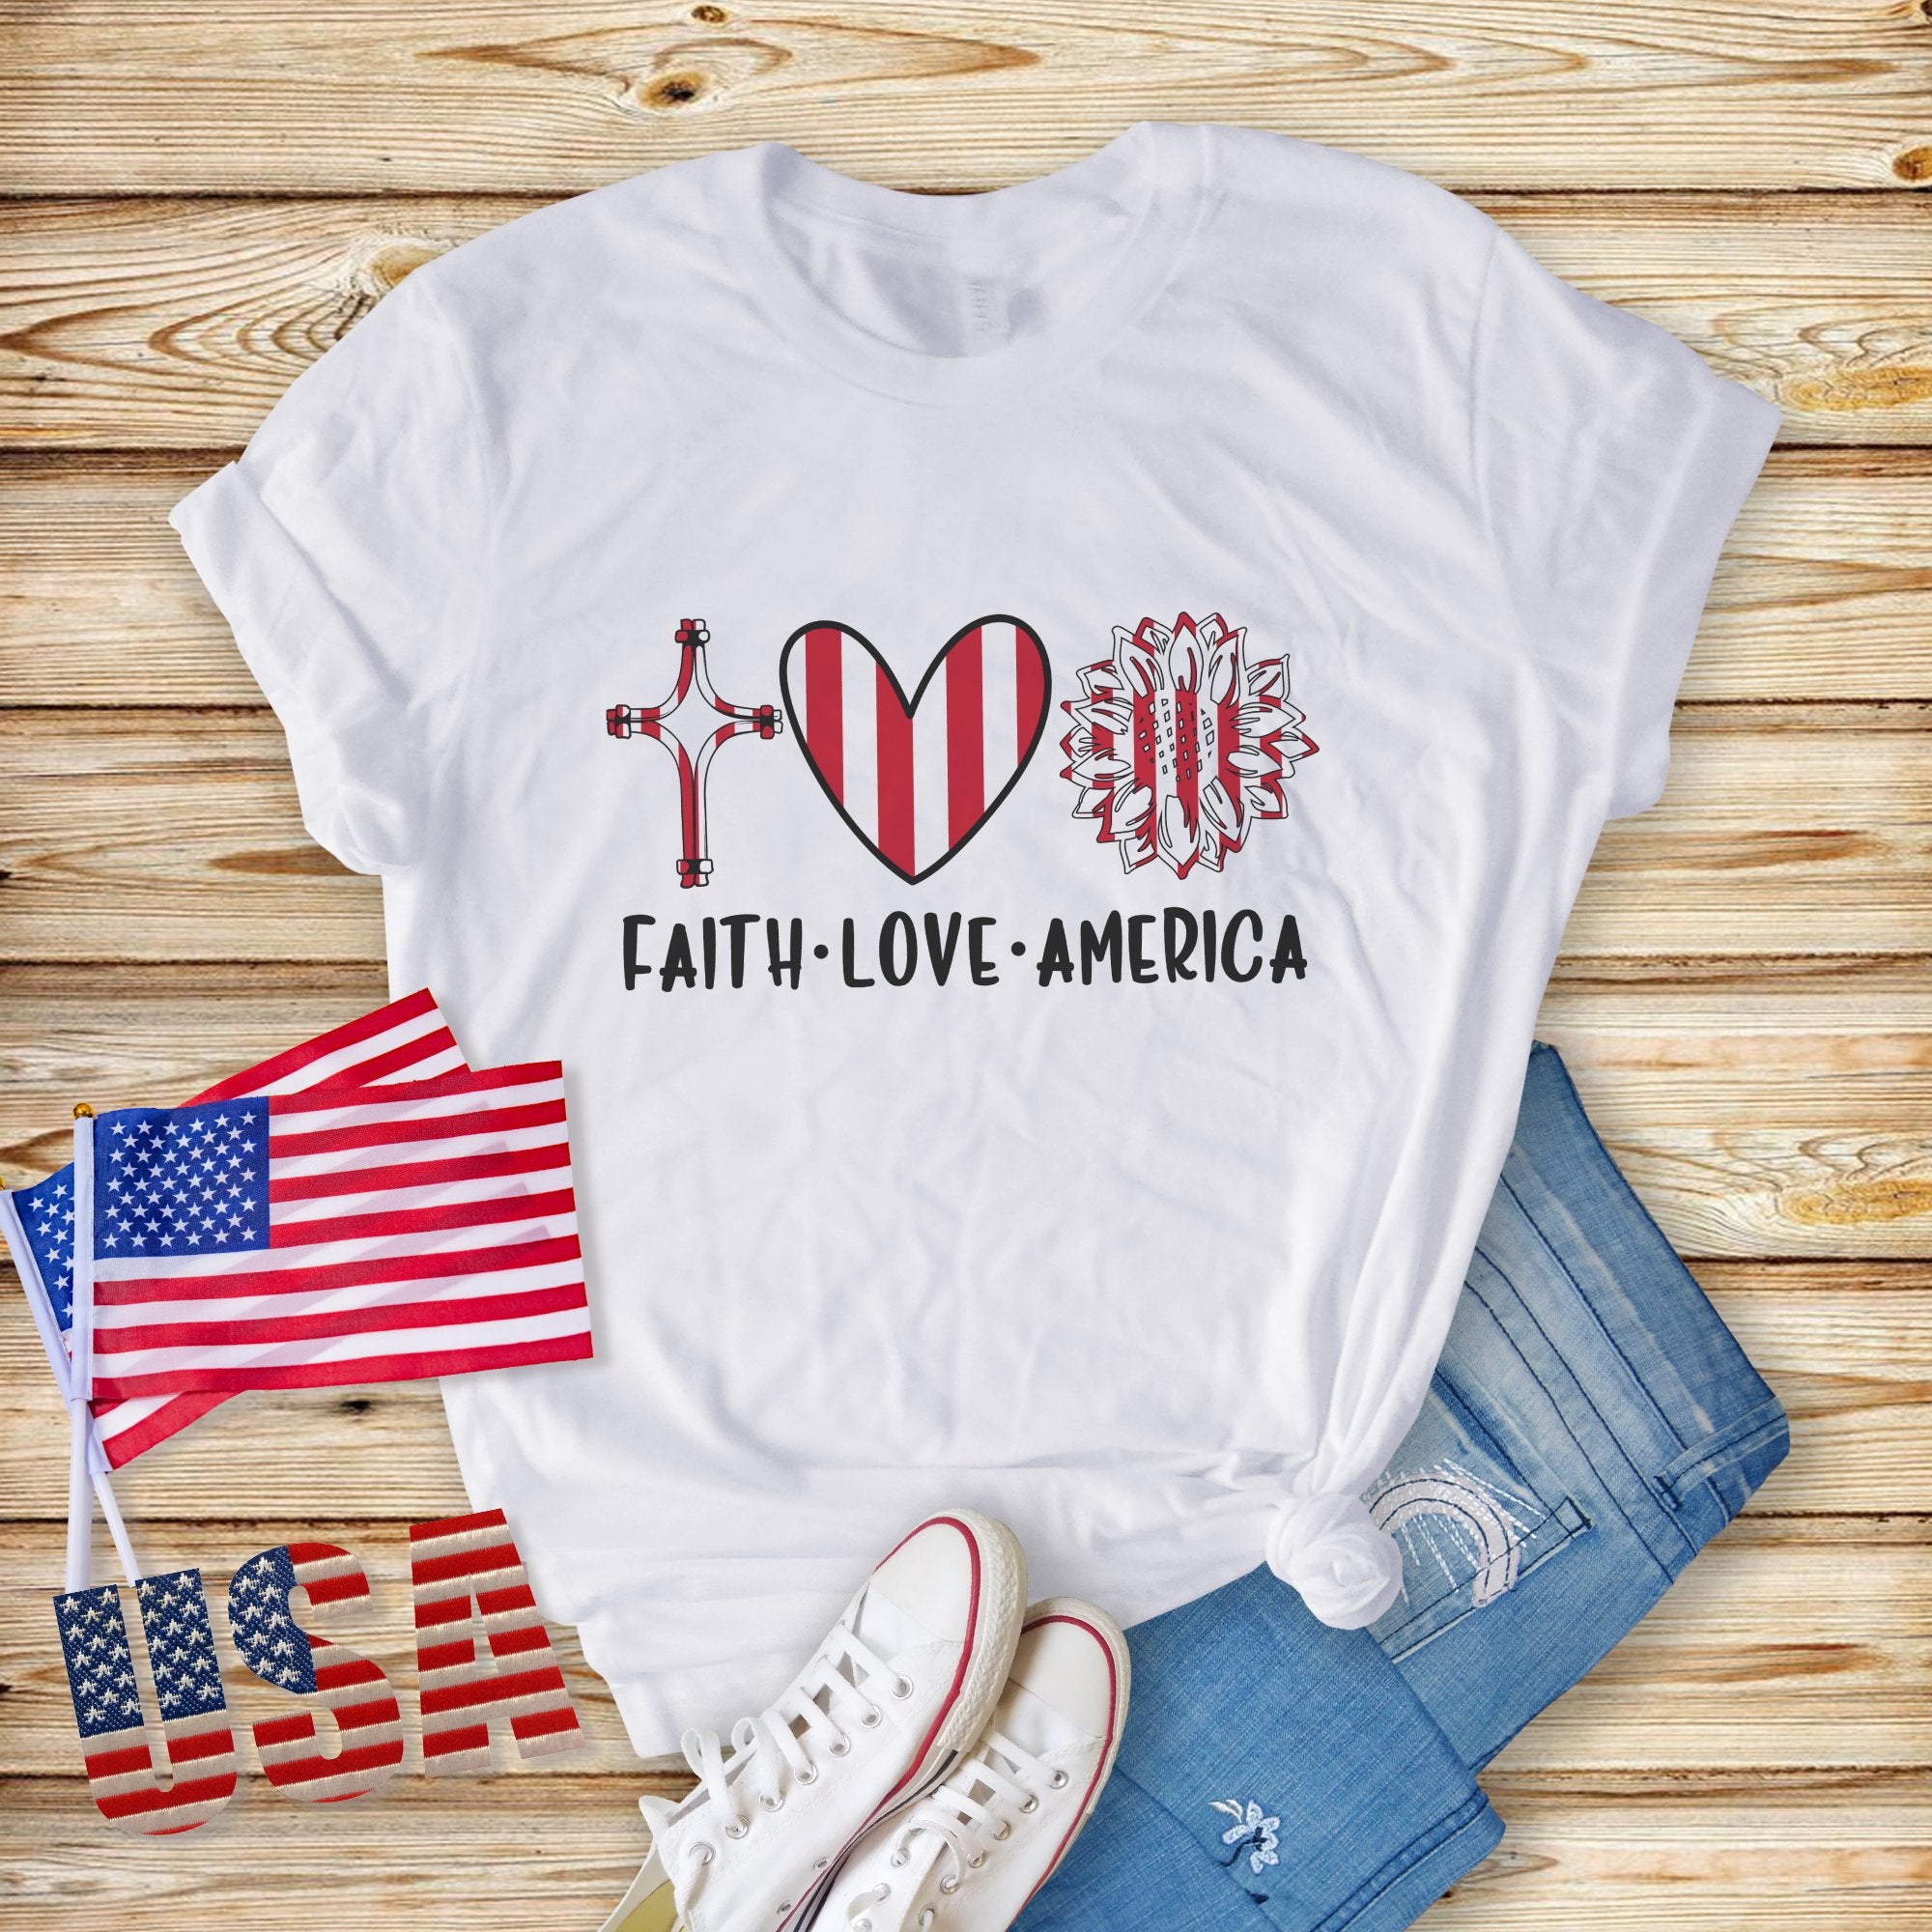 Faith Love America Women's Short Sleeve Patriotic T-Shirt Size: XS Color: Baby Blue Jesus Passion Apparel